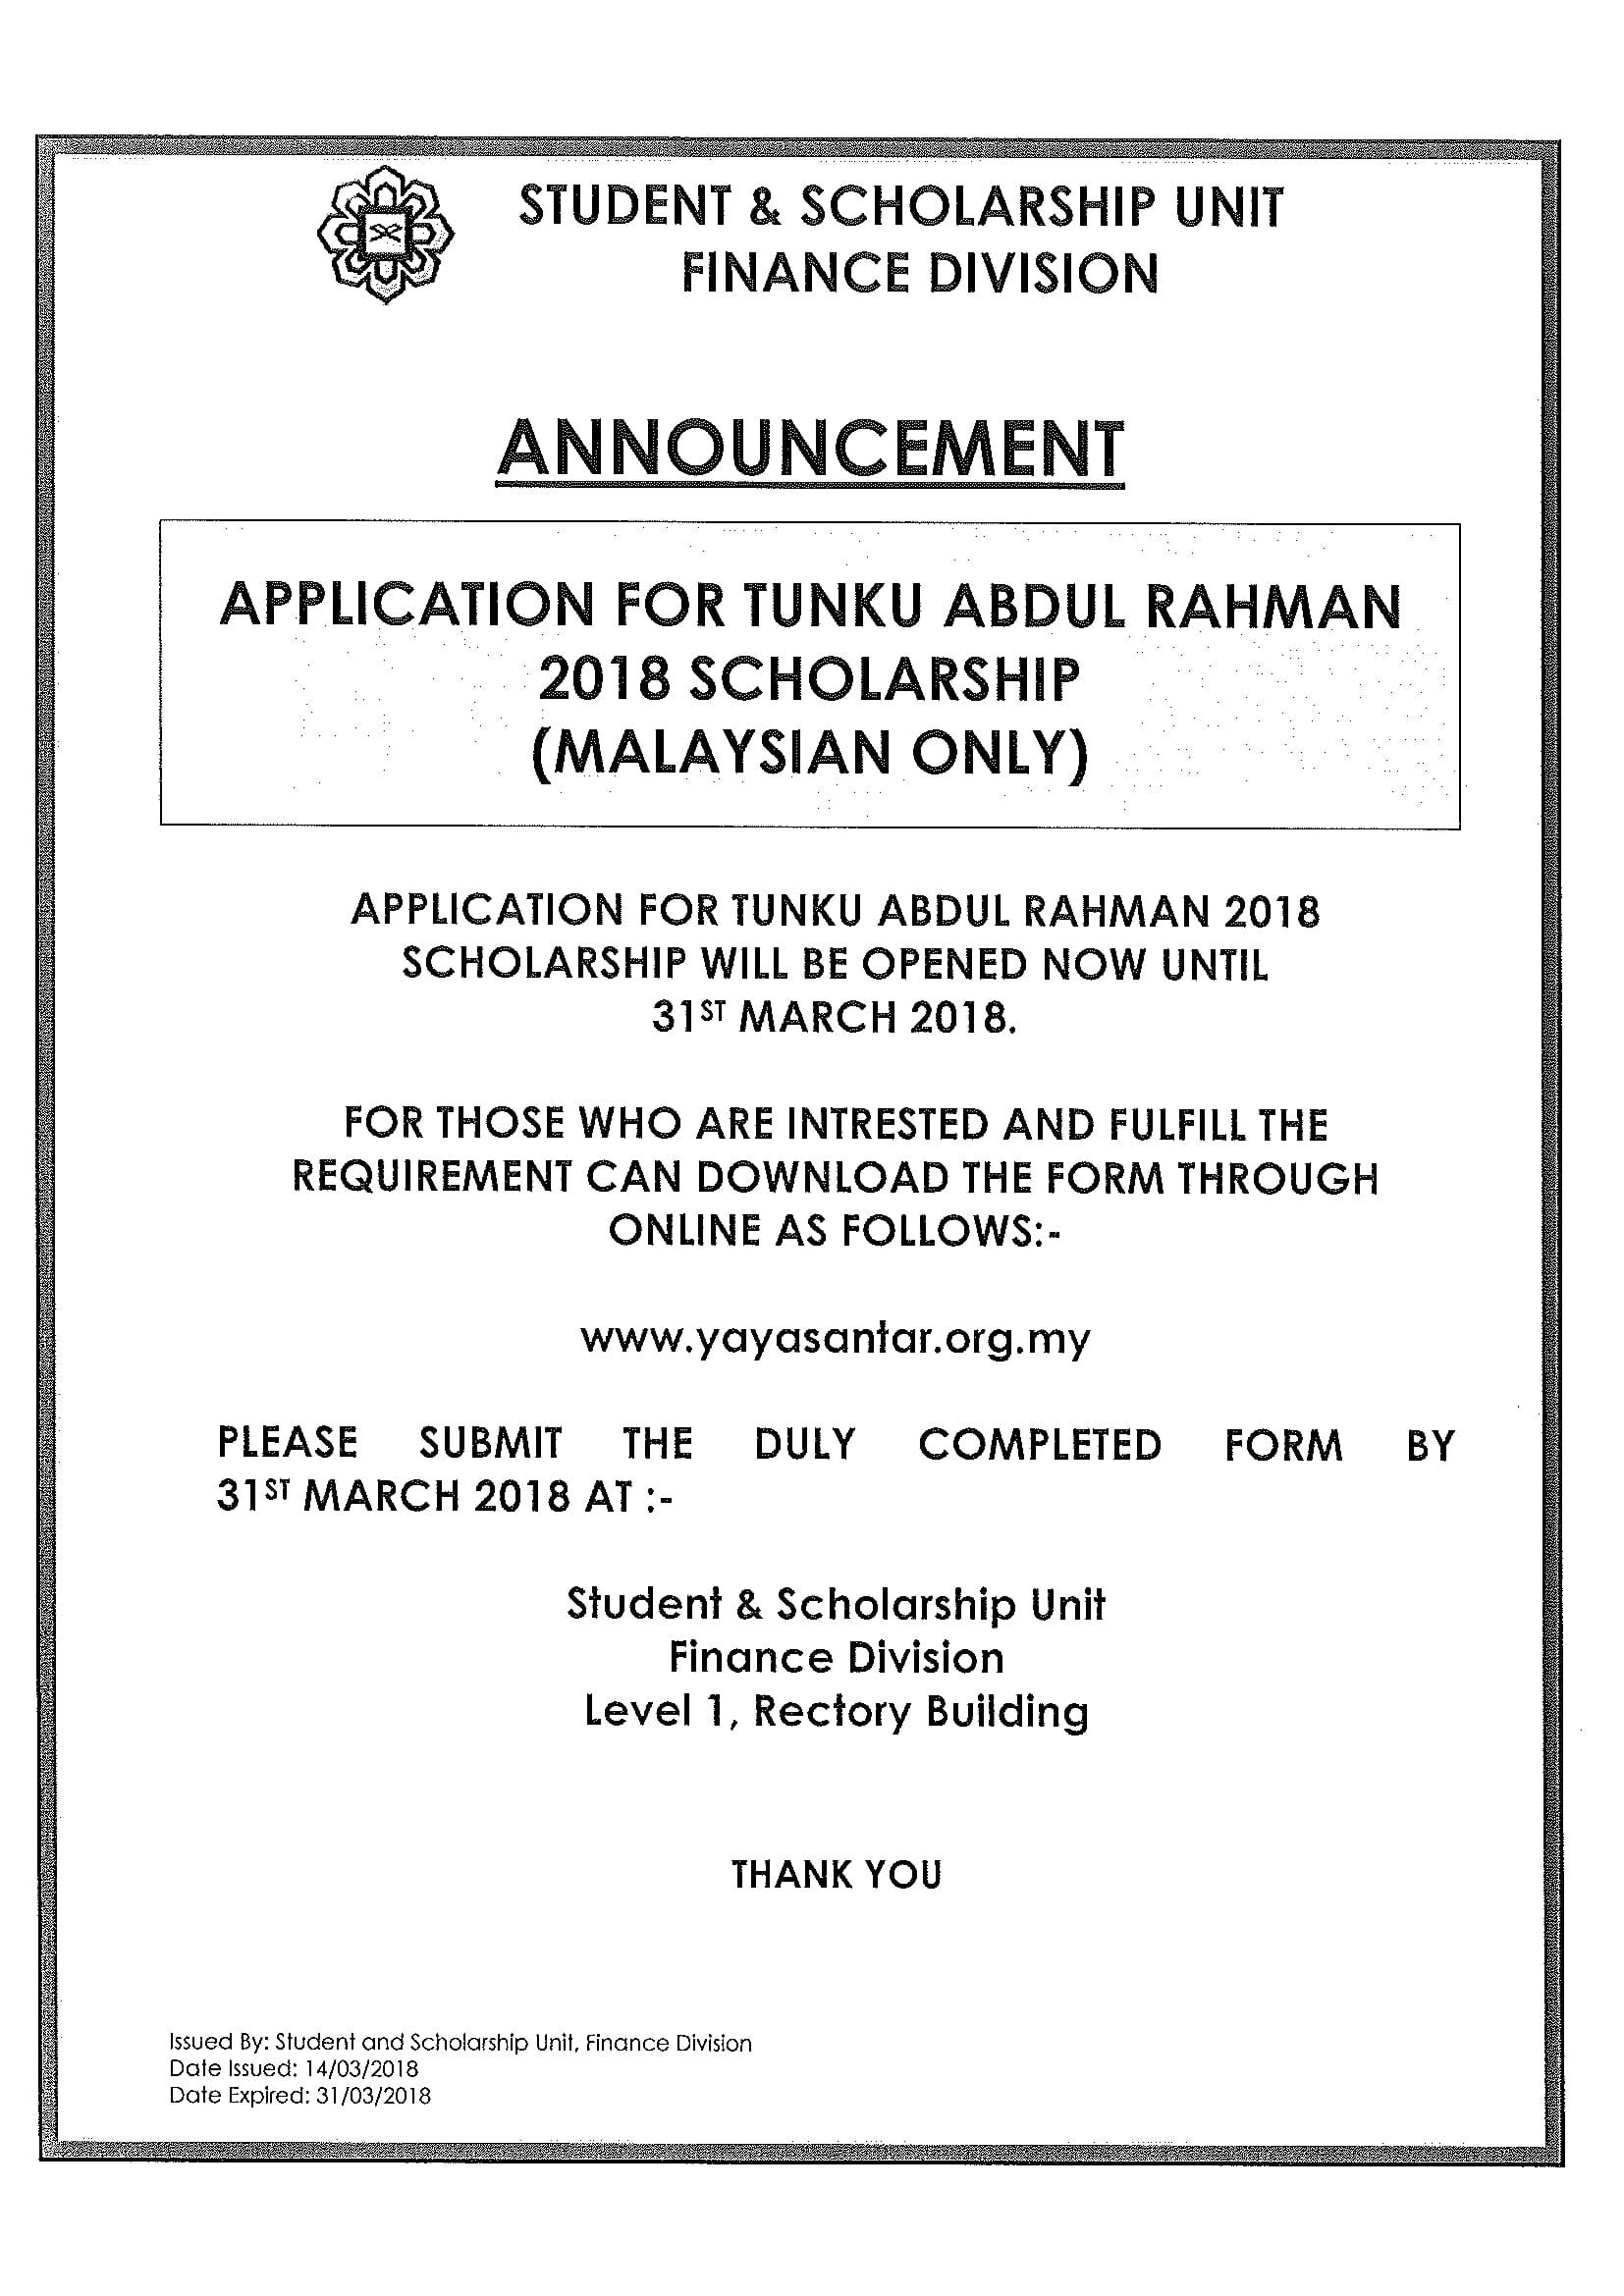 APPLICATION FOR TUNKU ABDUL RAHMAN 2018 SCHOLARSHIP (MALAYSIAN ONLY)